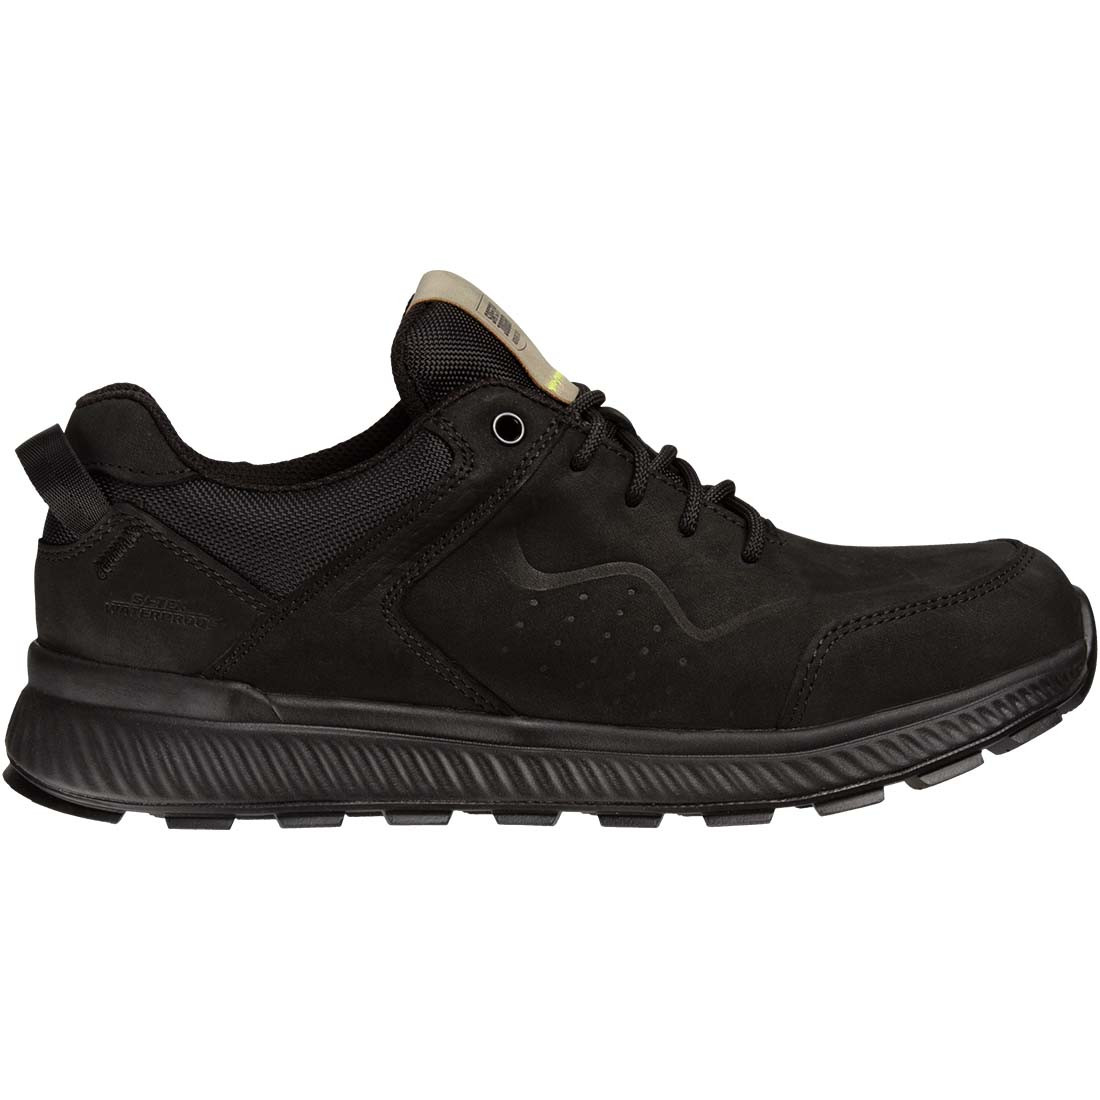 STEADY Waterproof leather sneakers - Footwear